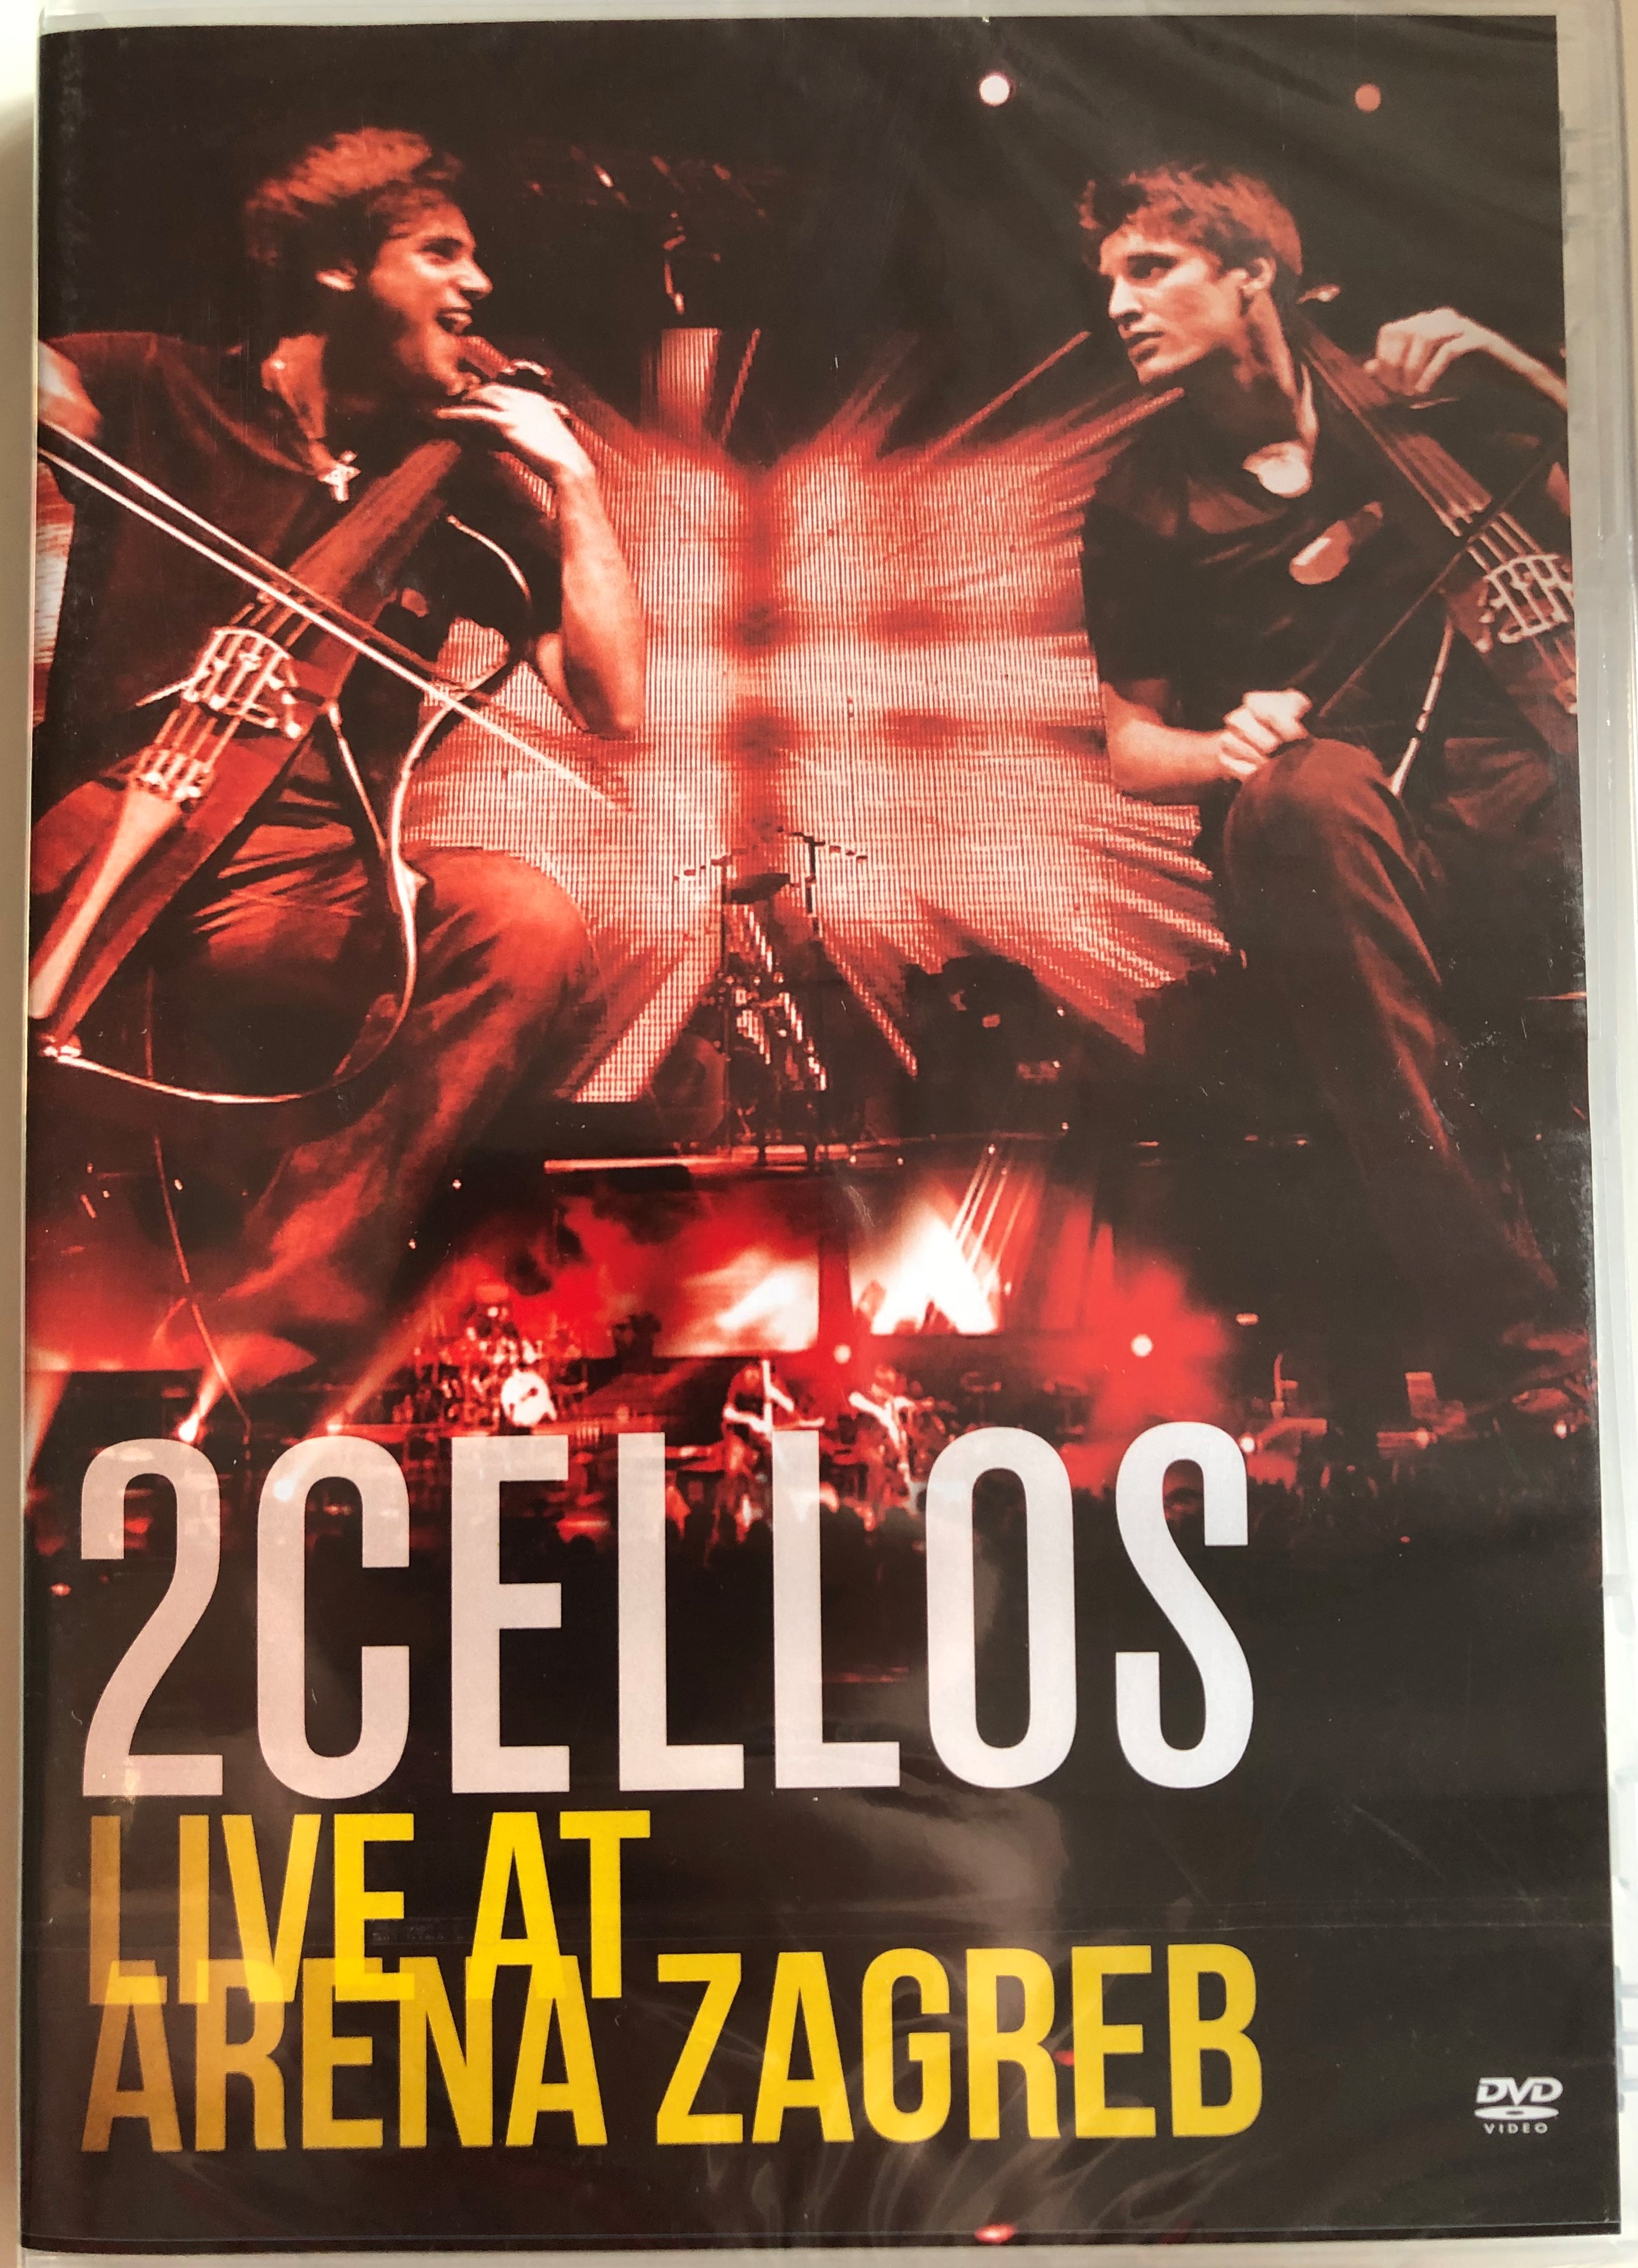 2Cellos Live At Arena Zagreb DVD 2013 / Directed by Kristijan Burlovic /  Recorded Live June 12 2012 Arena Zagreb, Croatia / Stjepan Hauser, Luka  Sulic cellos / Condutcted by Ivo Lipanovic - bibleinmylanguage